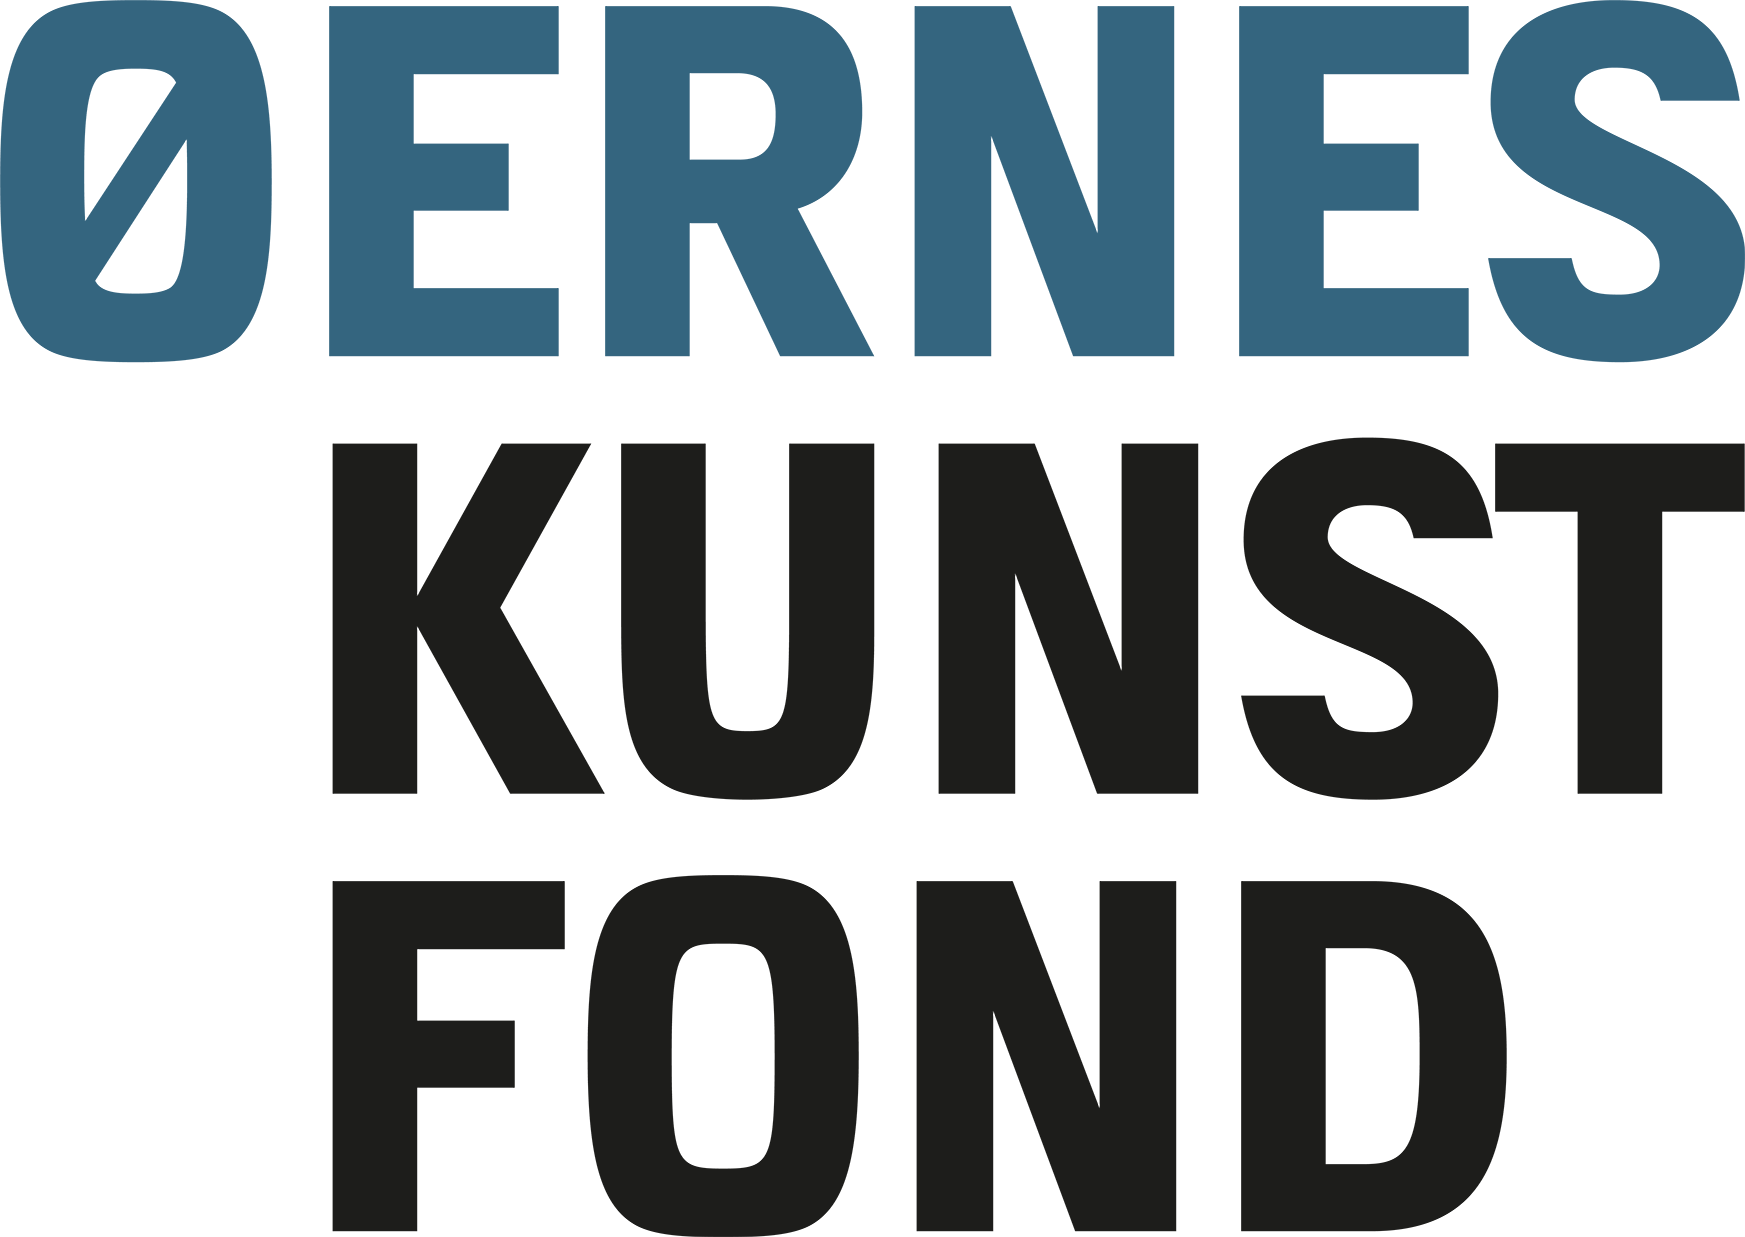 Øernes Kunstfond's logo